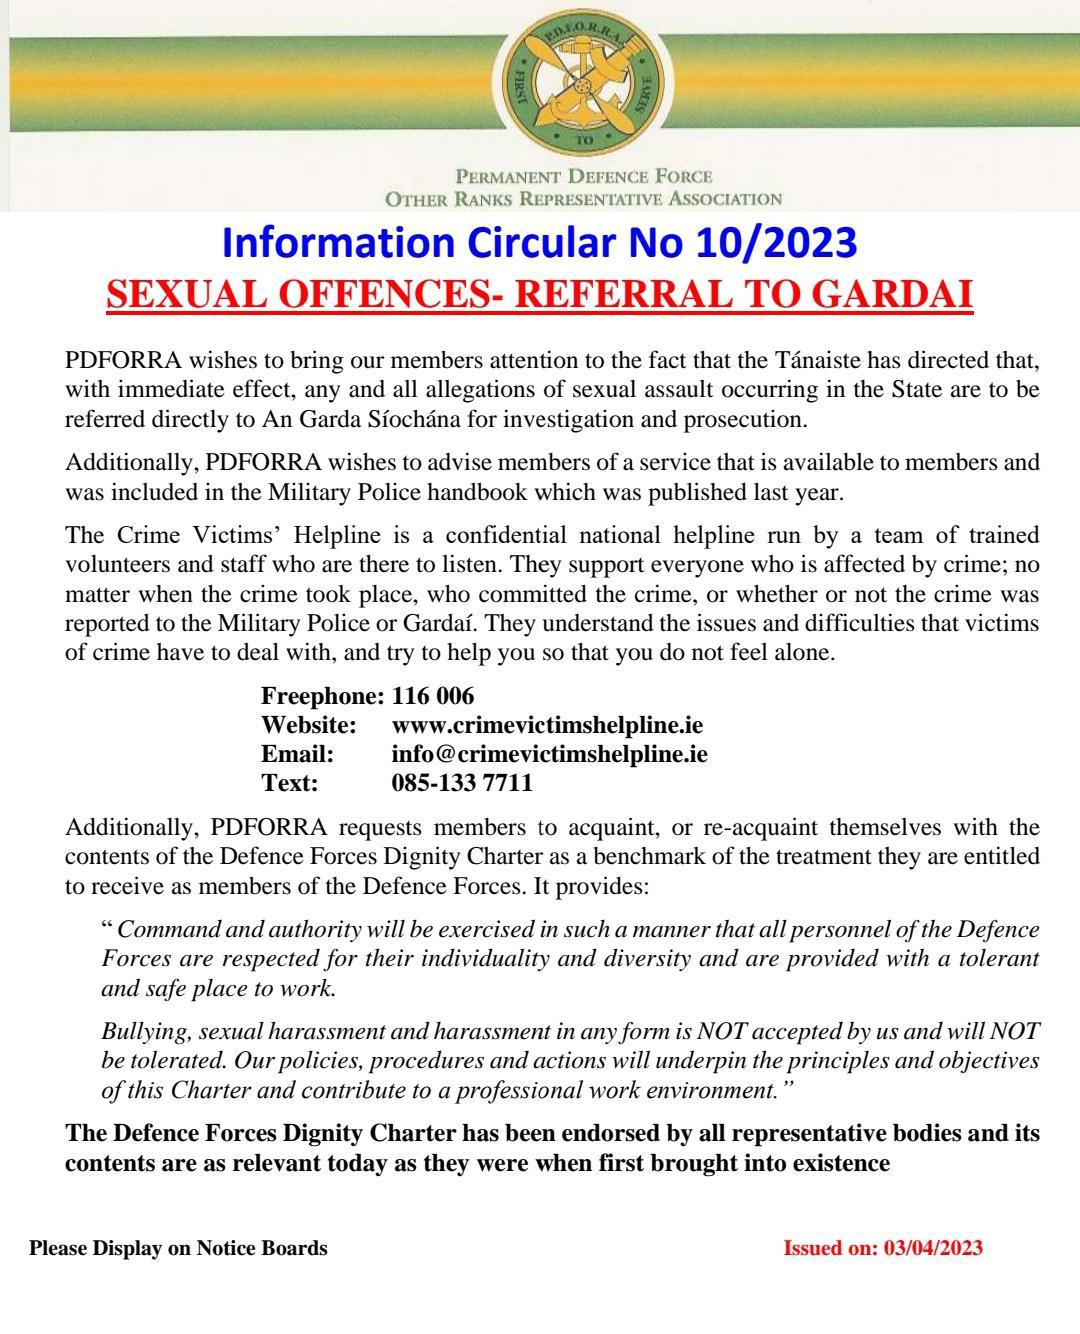 Information Circular No 10 - Referral of Sexual offence to Gardai